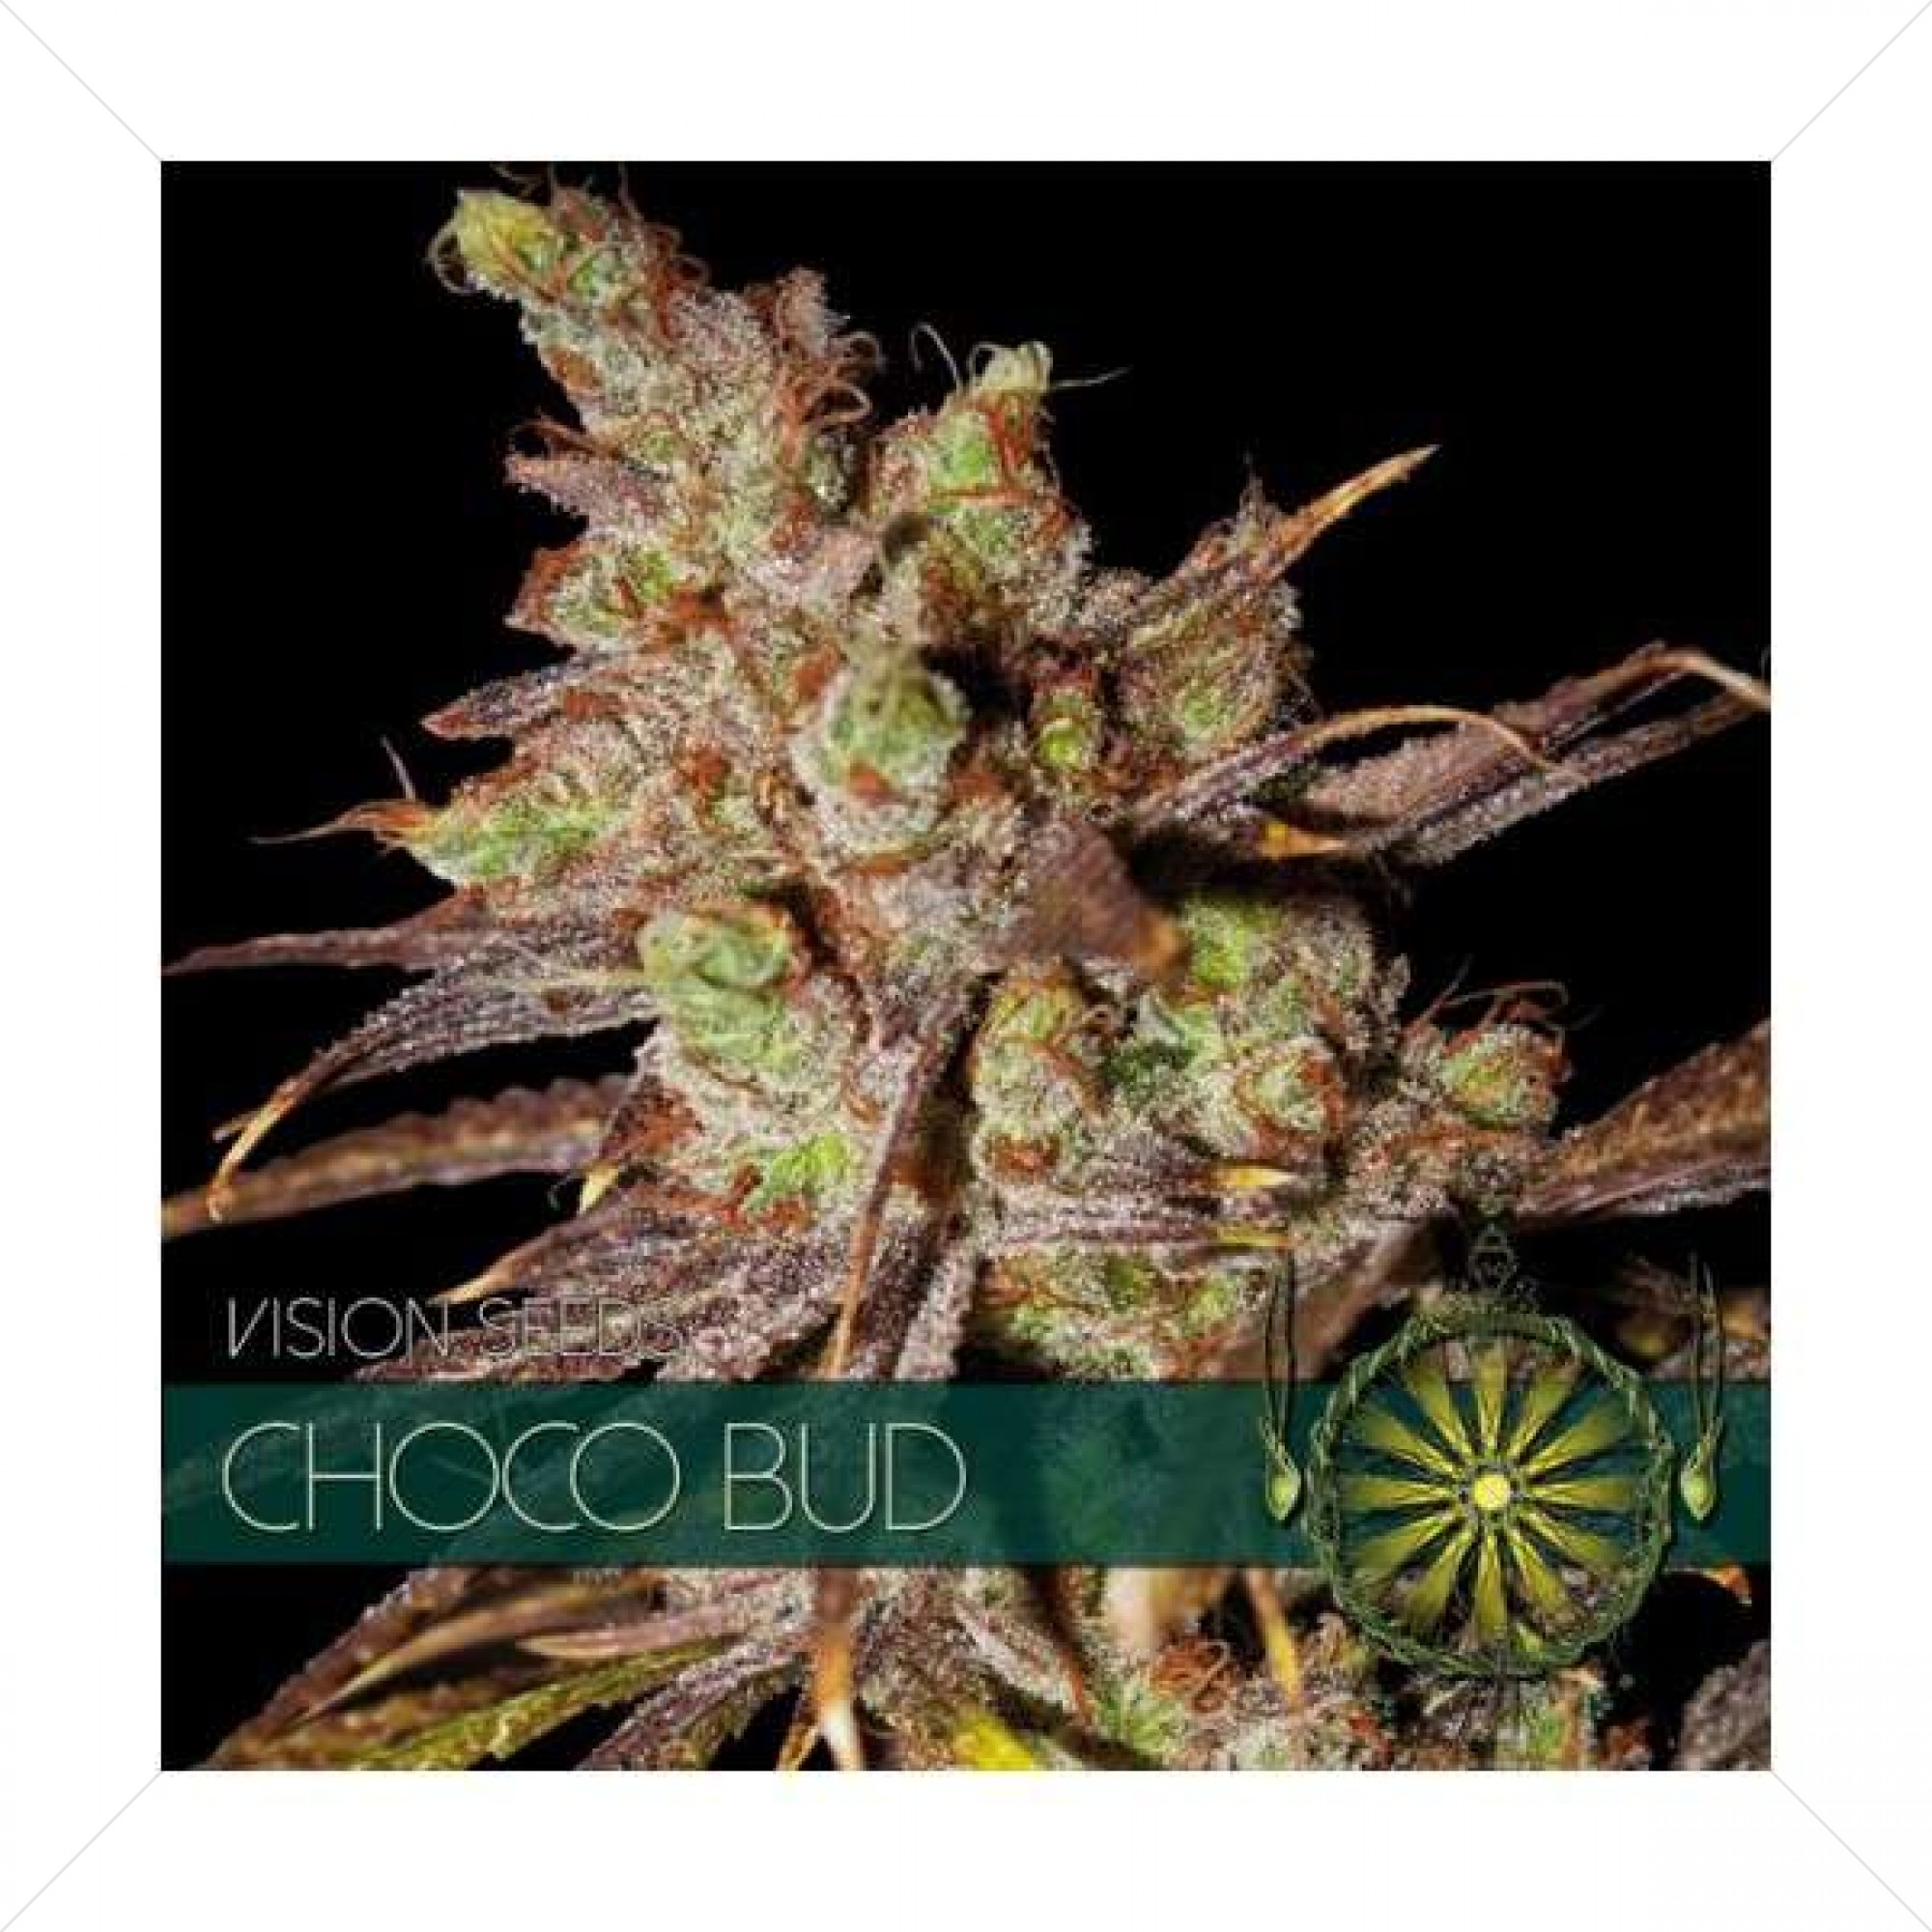 Choco Bud ( Vision Seeds )